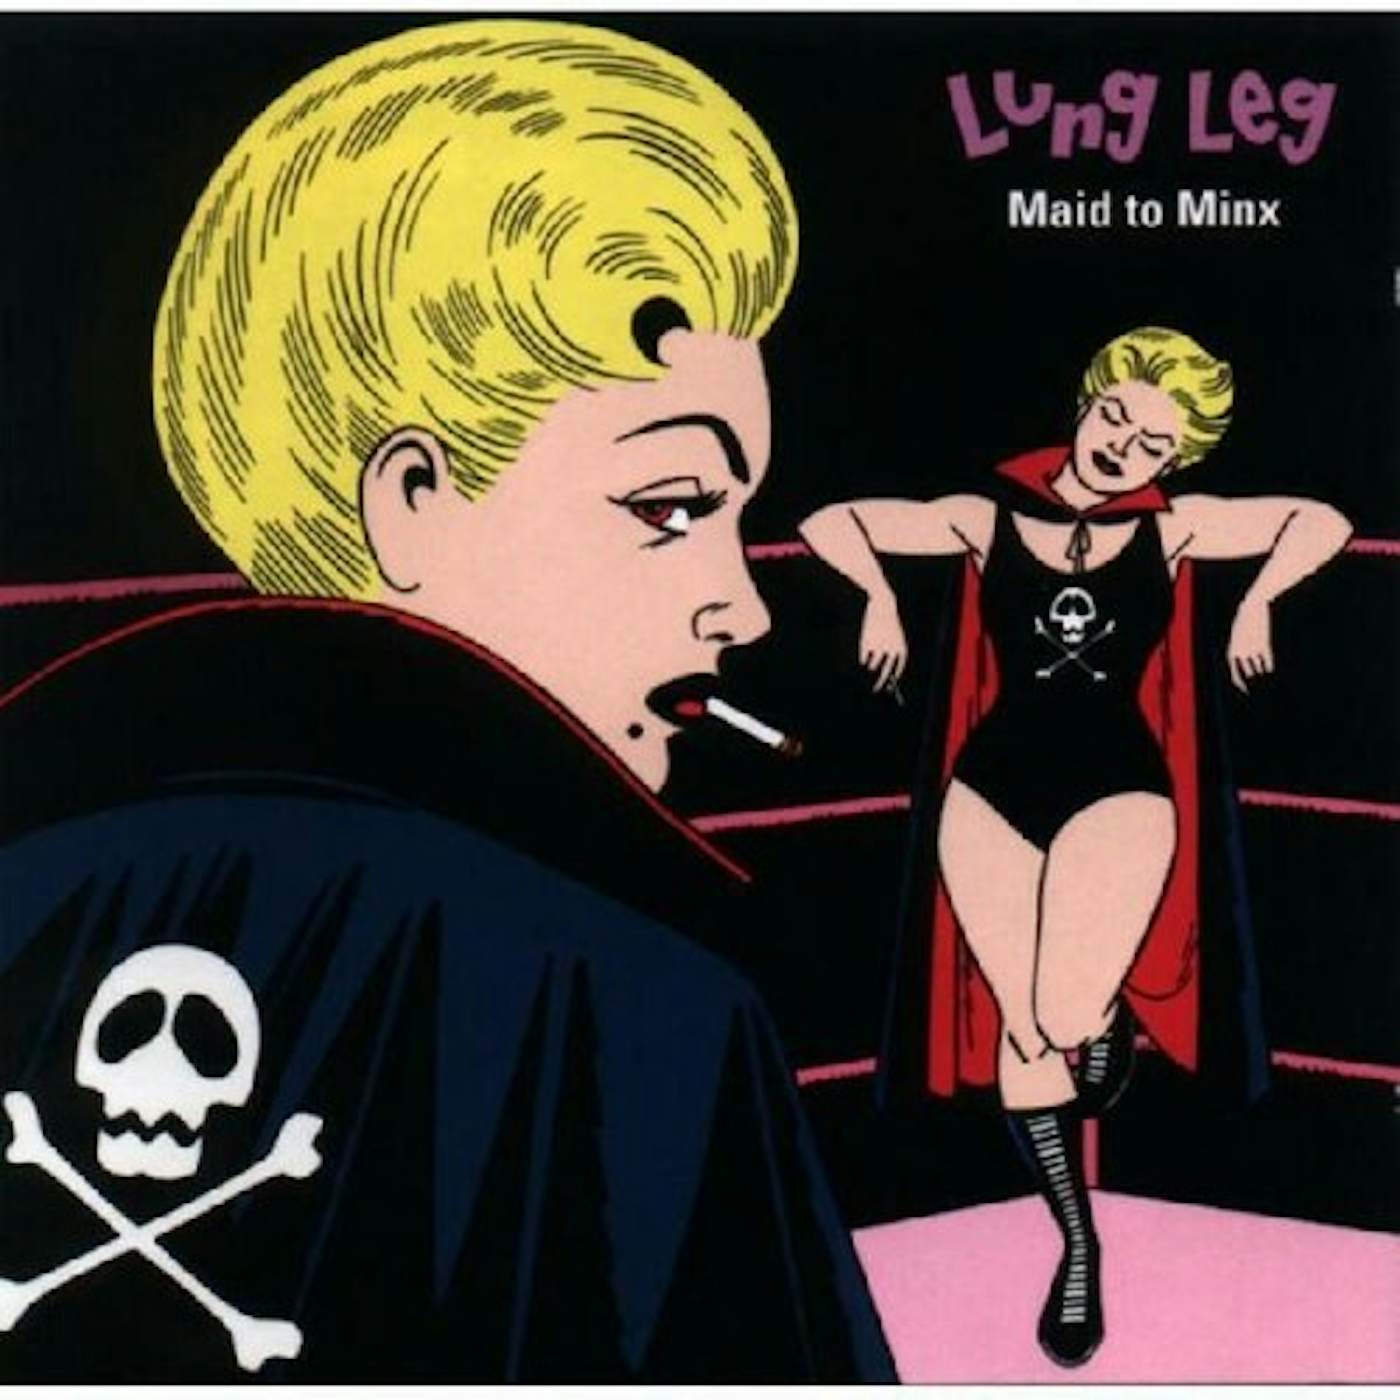 Lung Leg Maid to Minx Vinyl Record